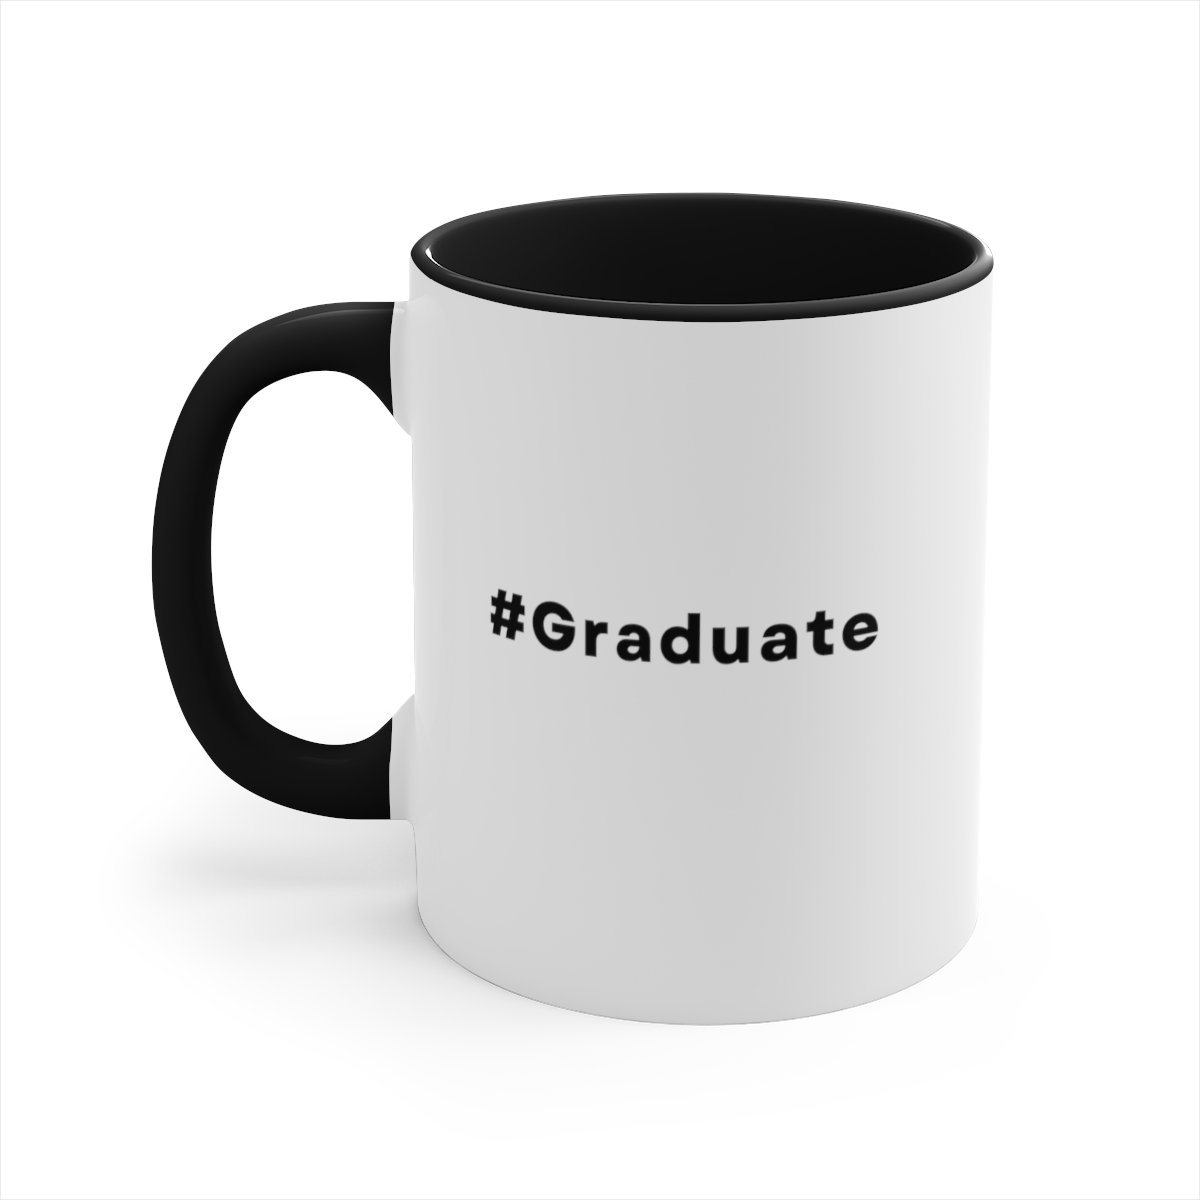 Graduate Smart Charming All The Above Coffee Mug Black